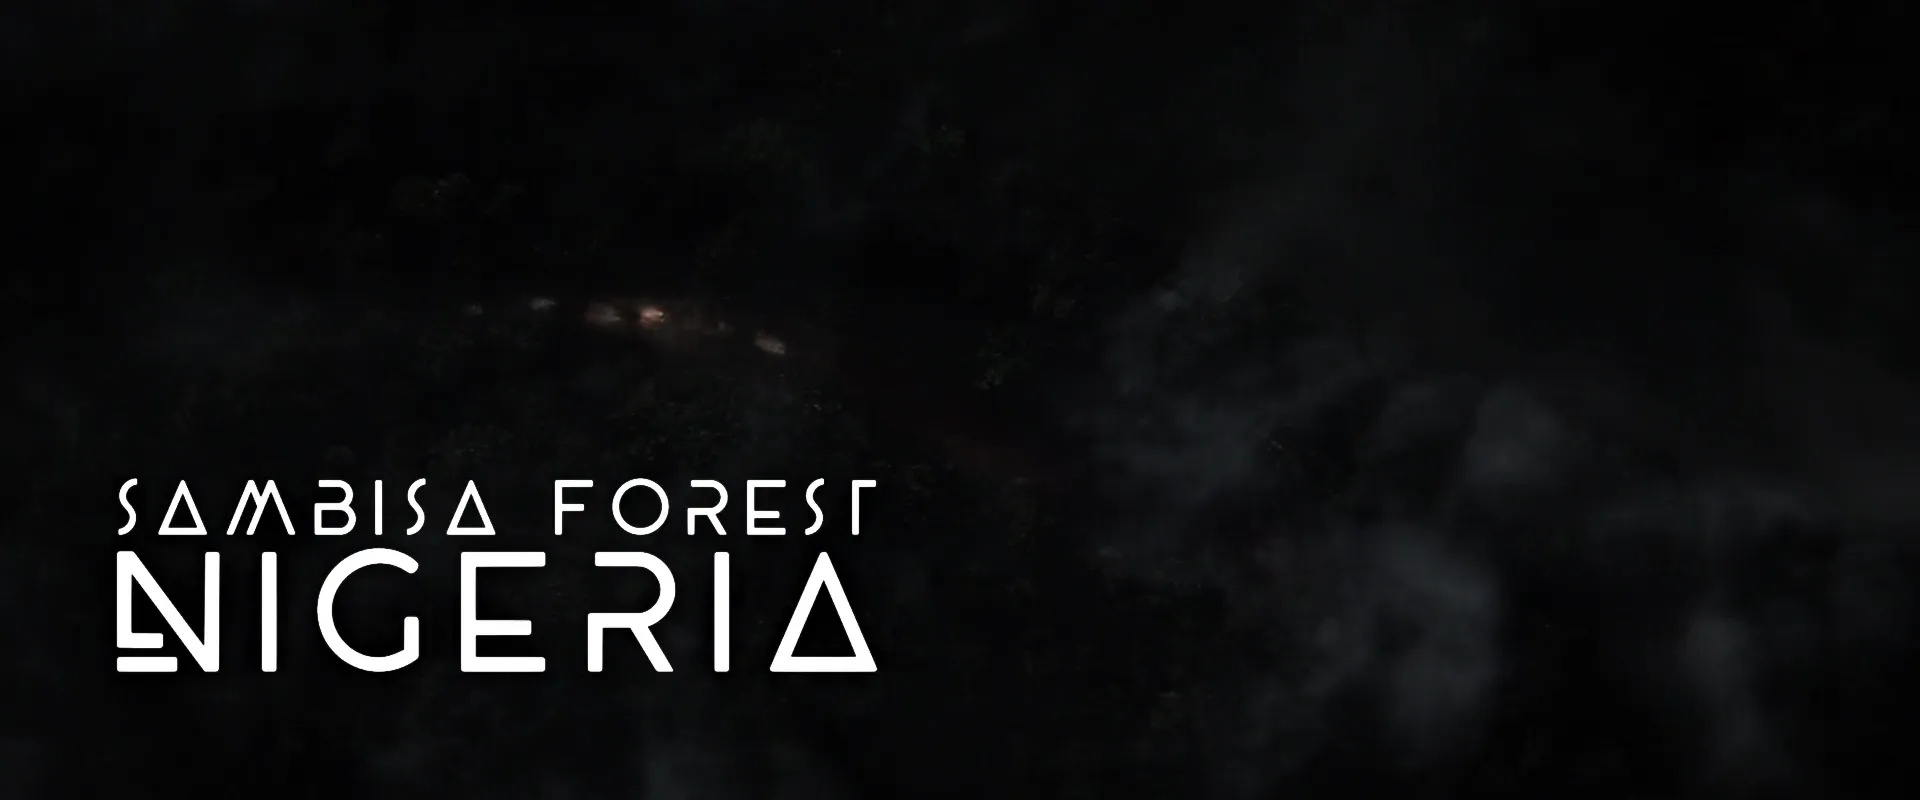 Sambisa Forest